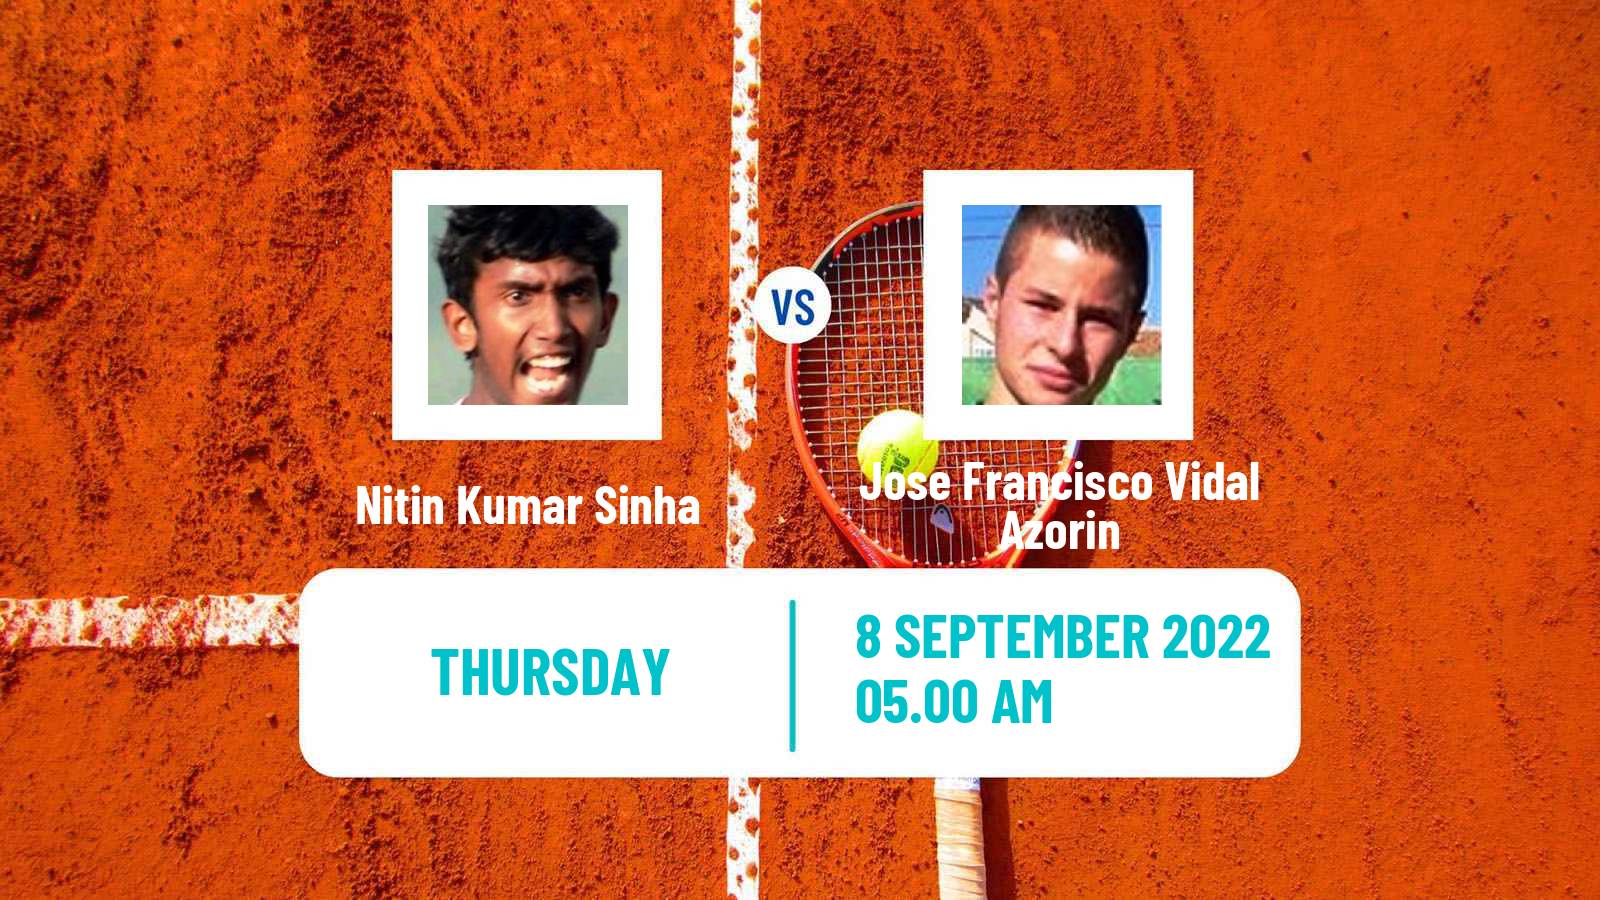 Tennis ITF Tournaments Nitin Kumar Sinha - Jose Francisco Vidal Azorin